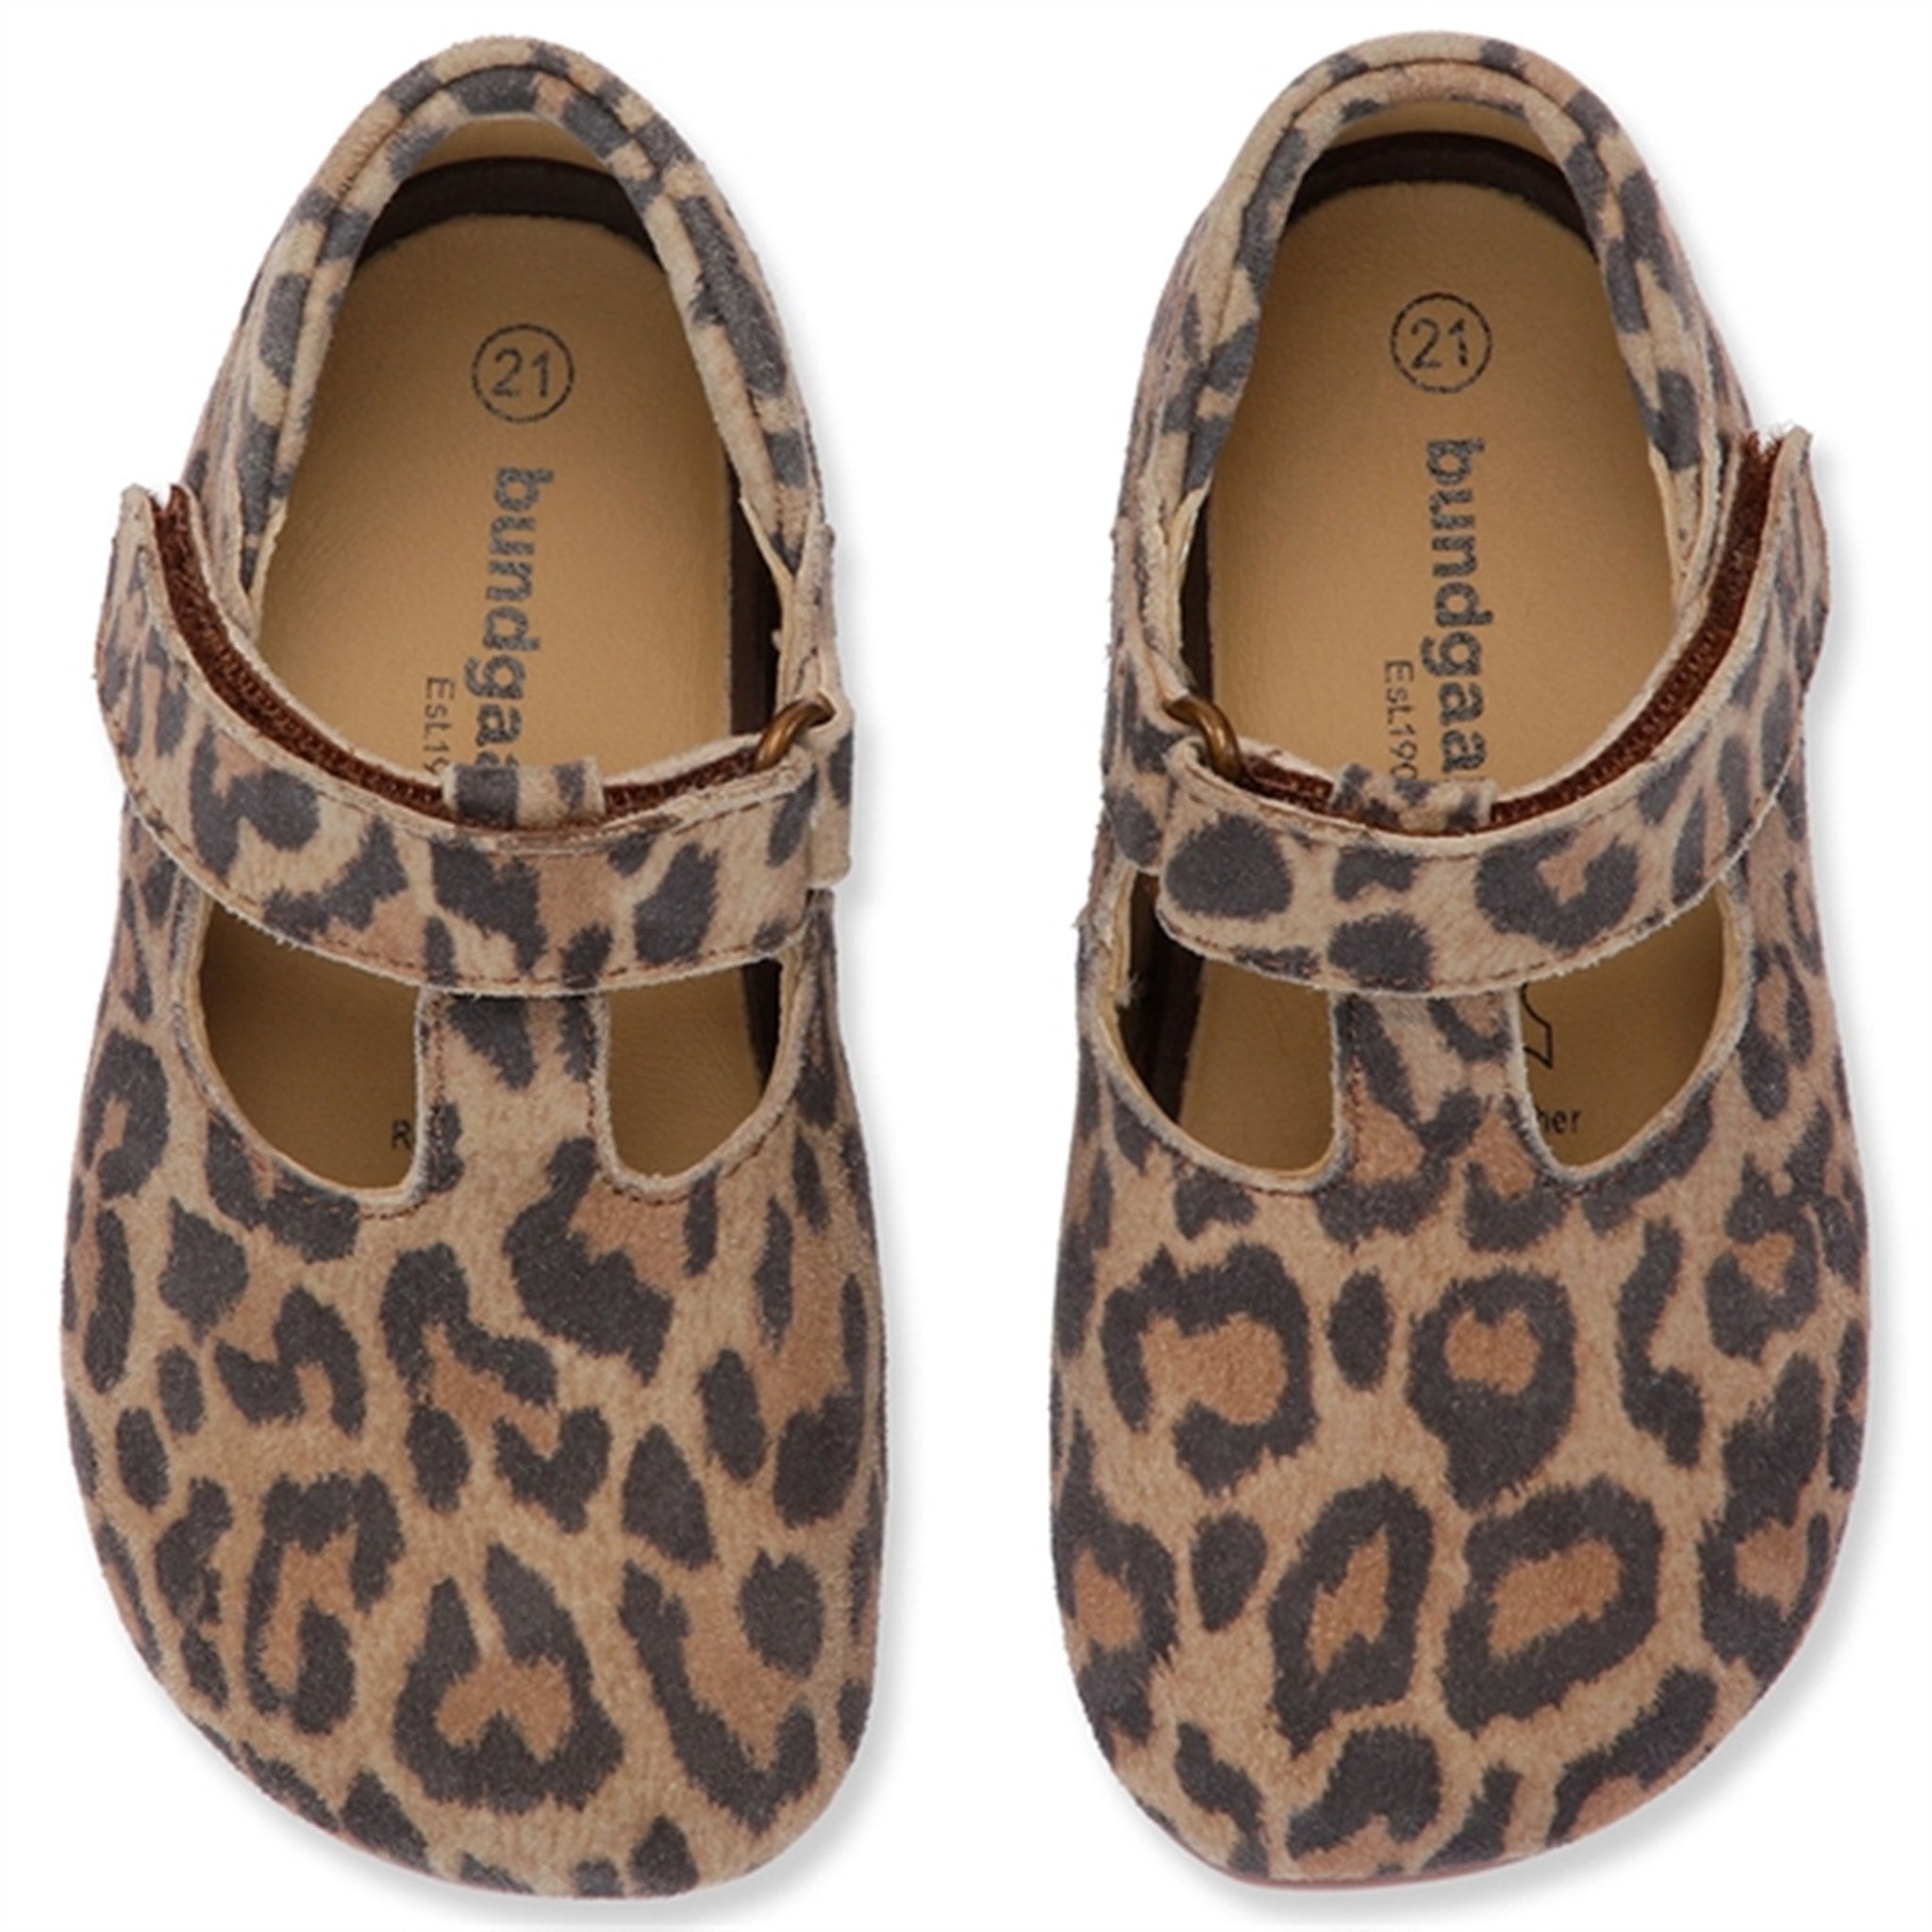 Bundgaard Mary ll Indoor Shoes Leopard 4